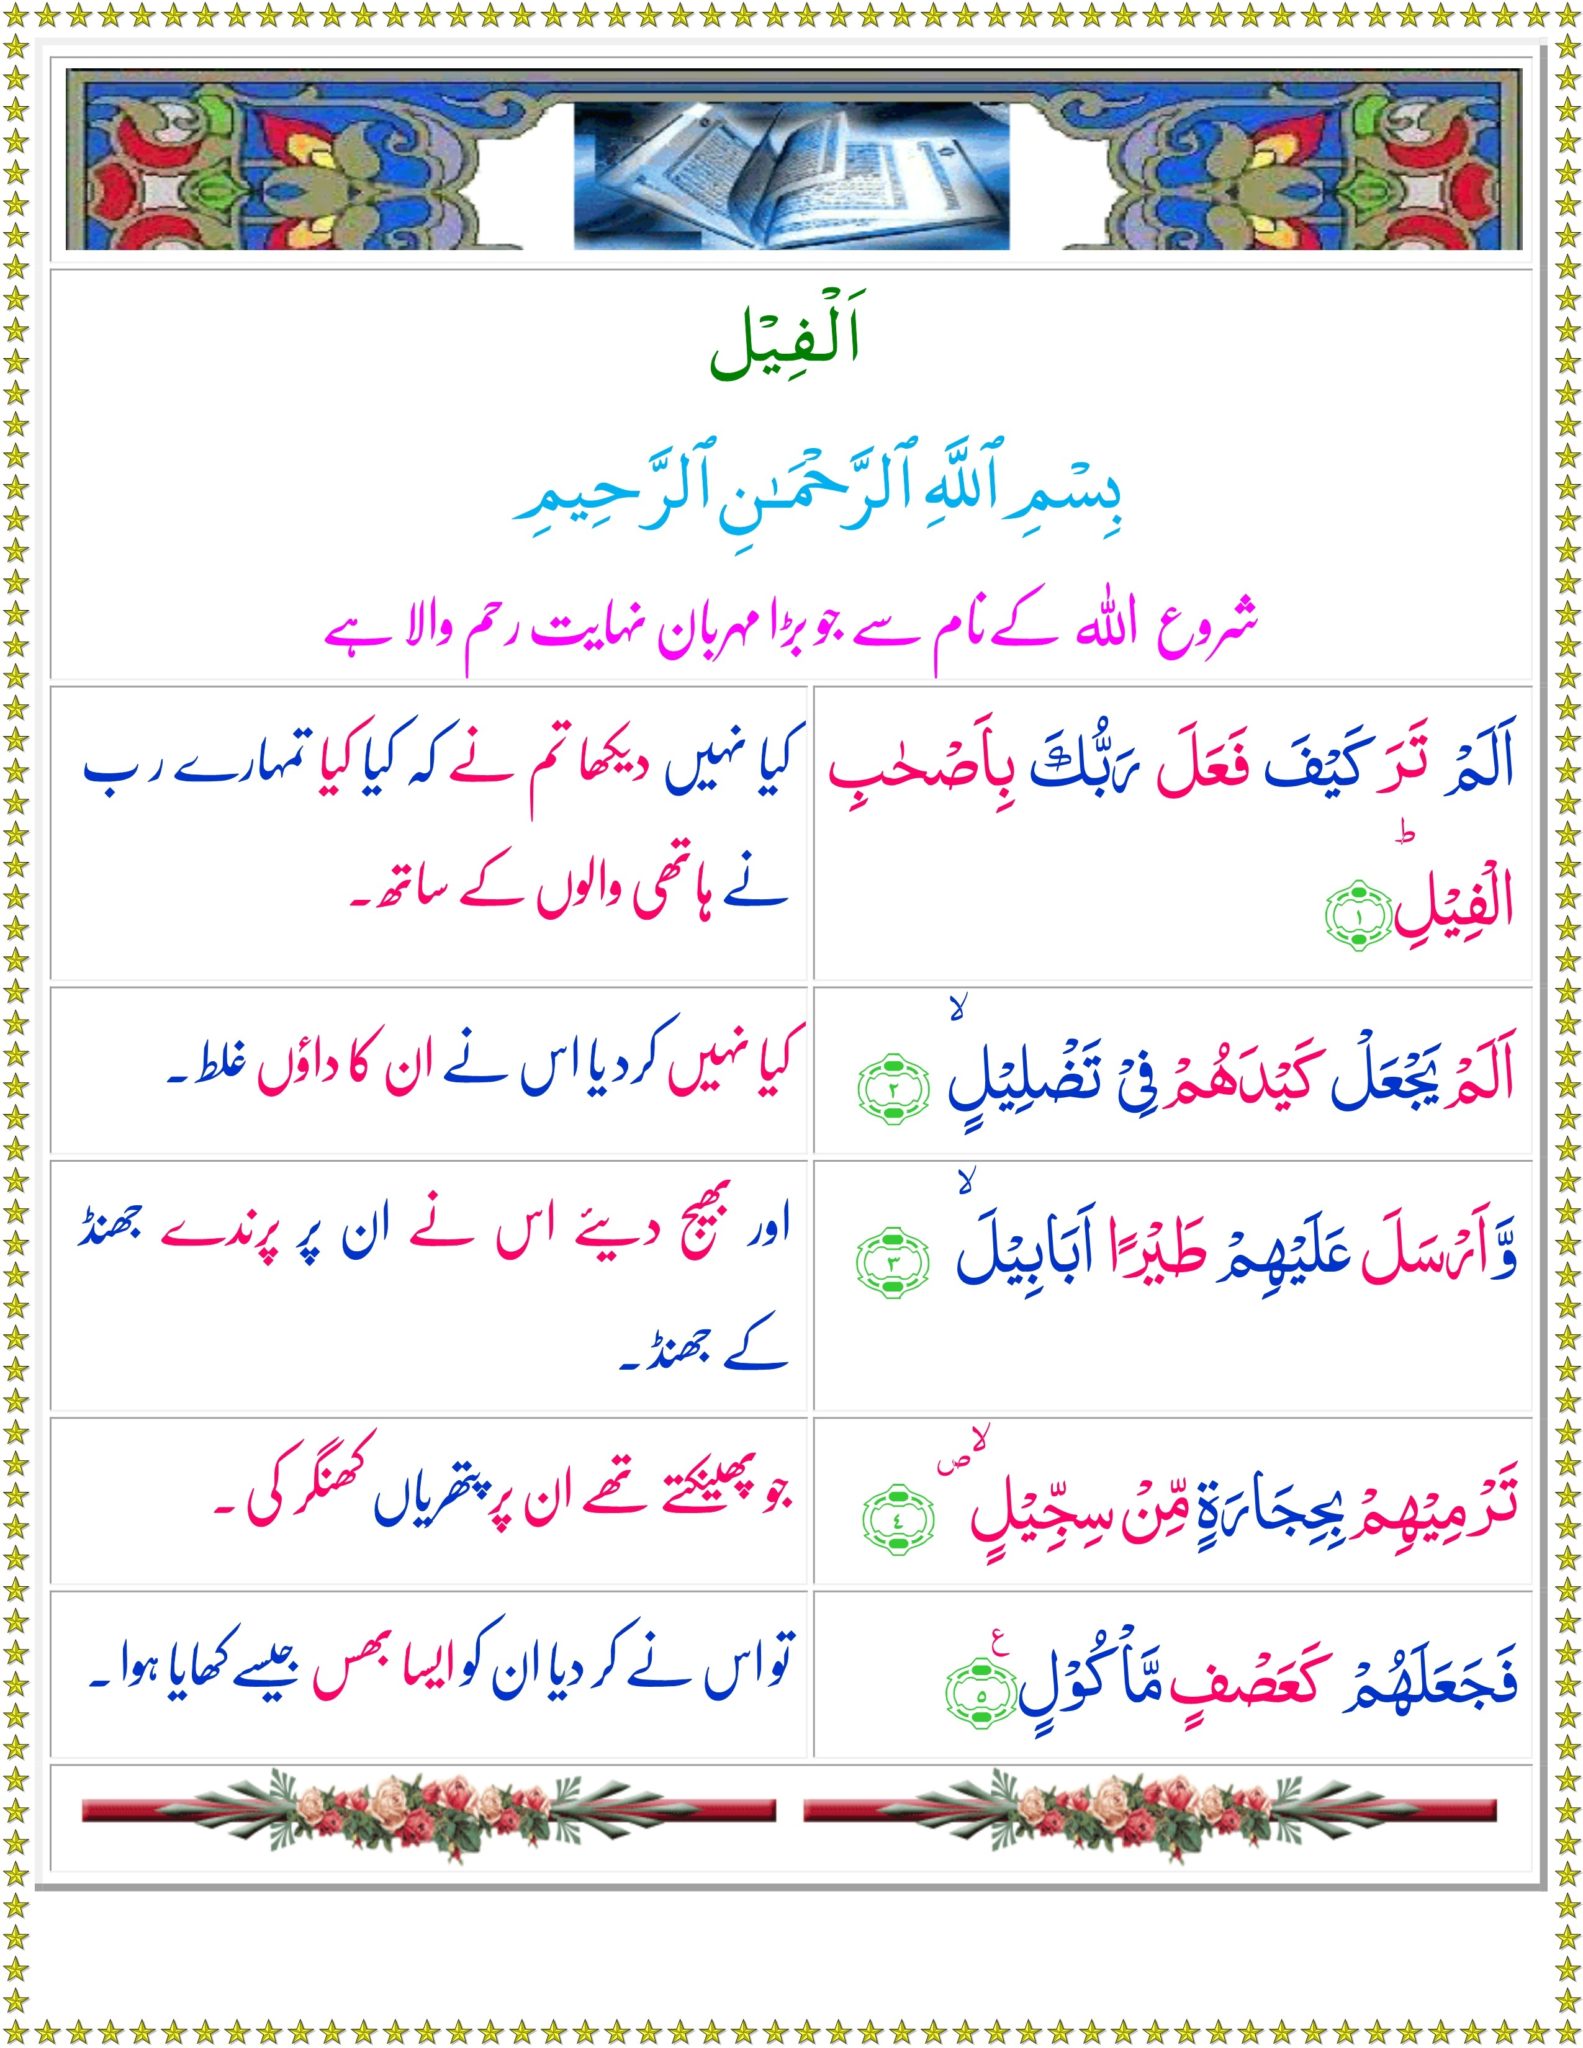 Surah Feel translation in Urdu, Hindi